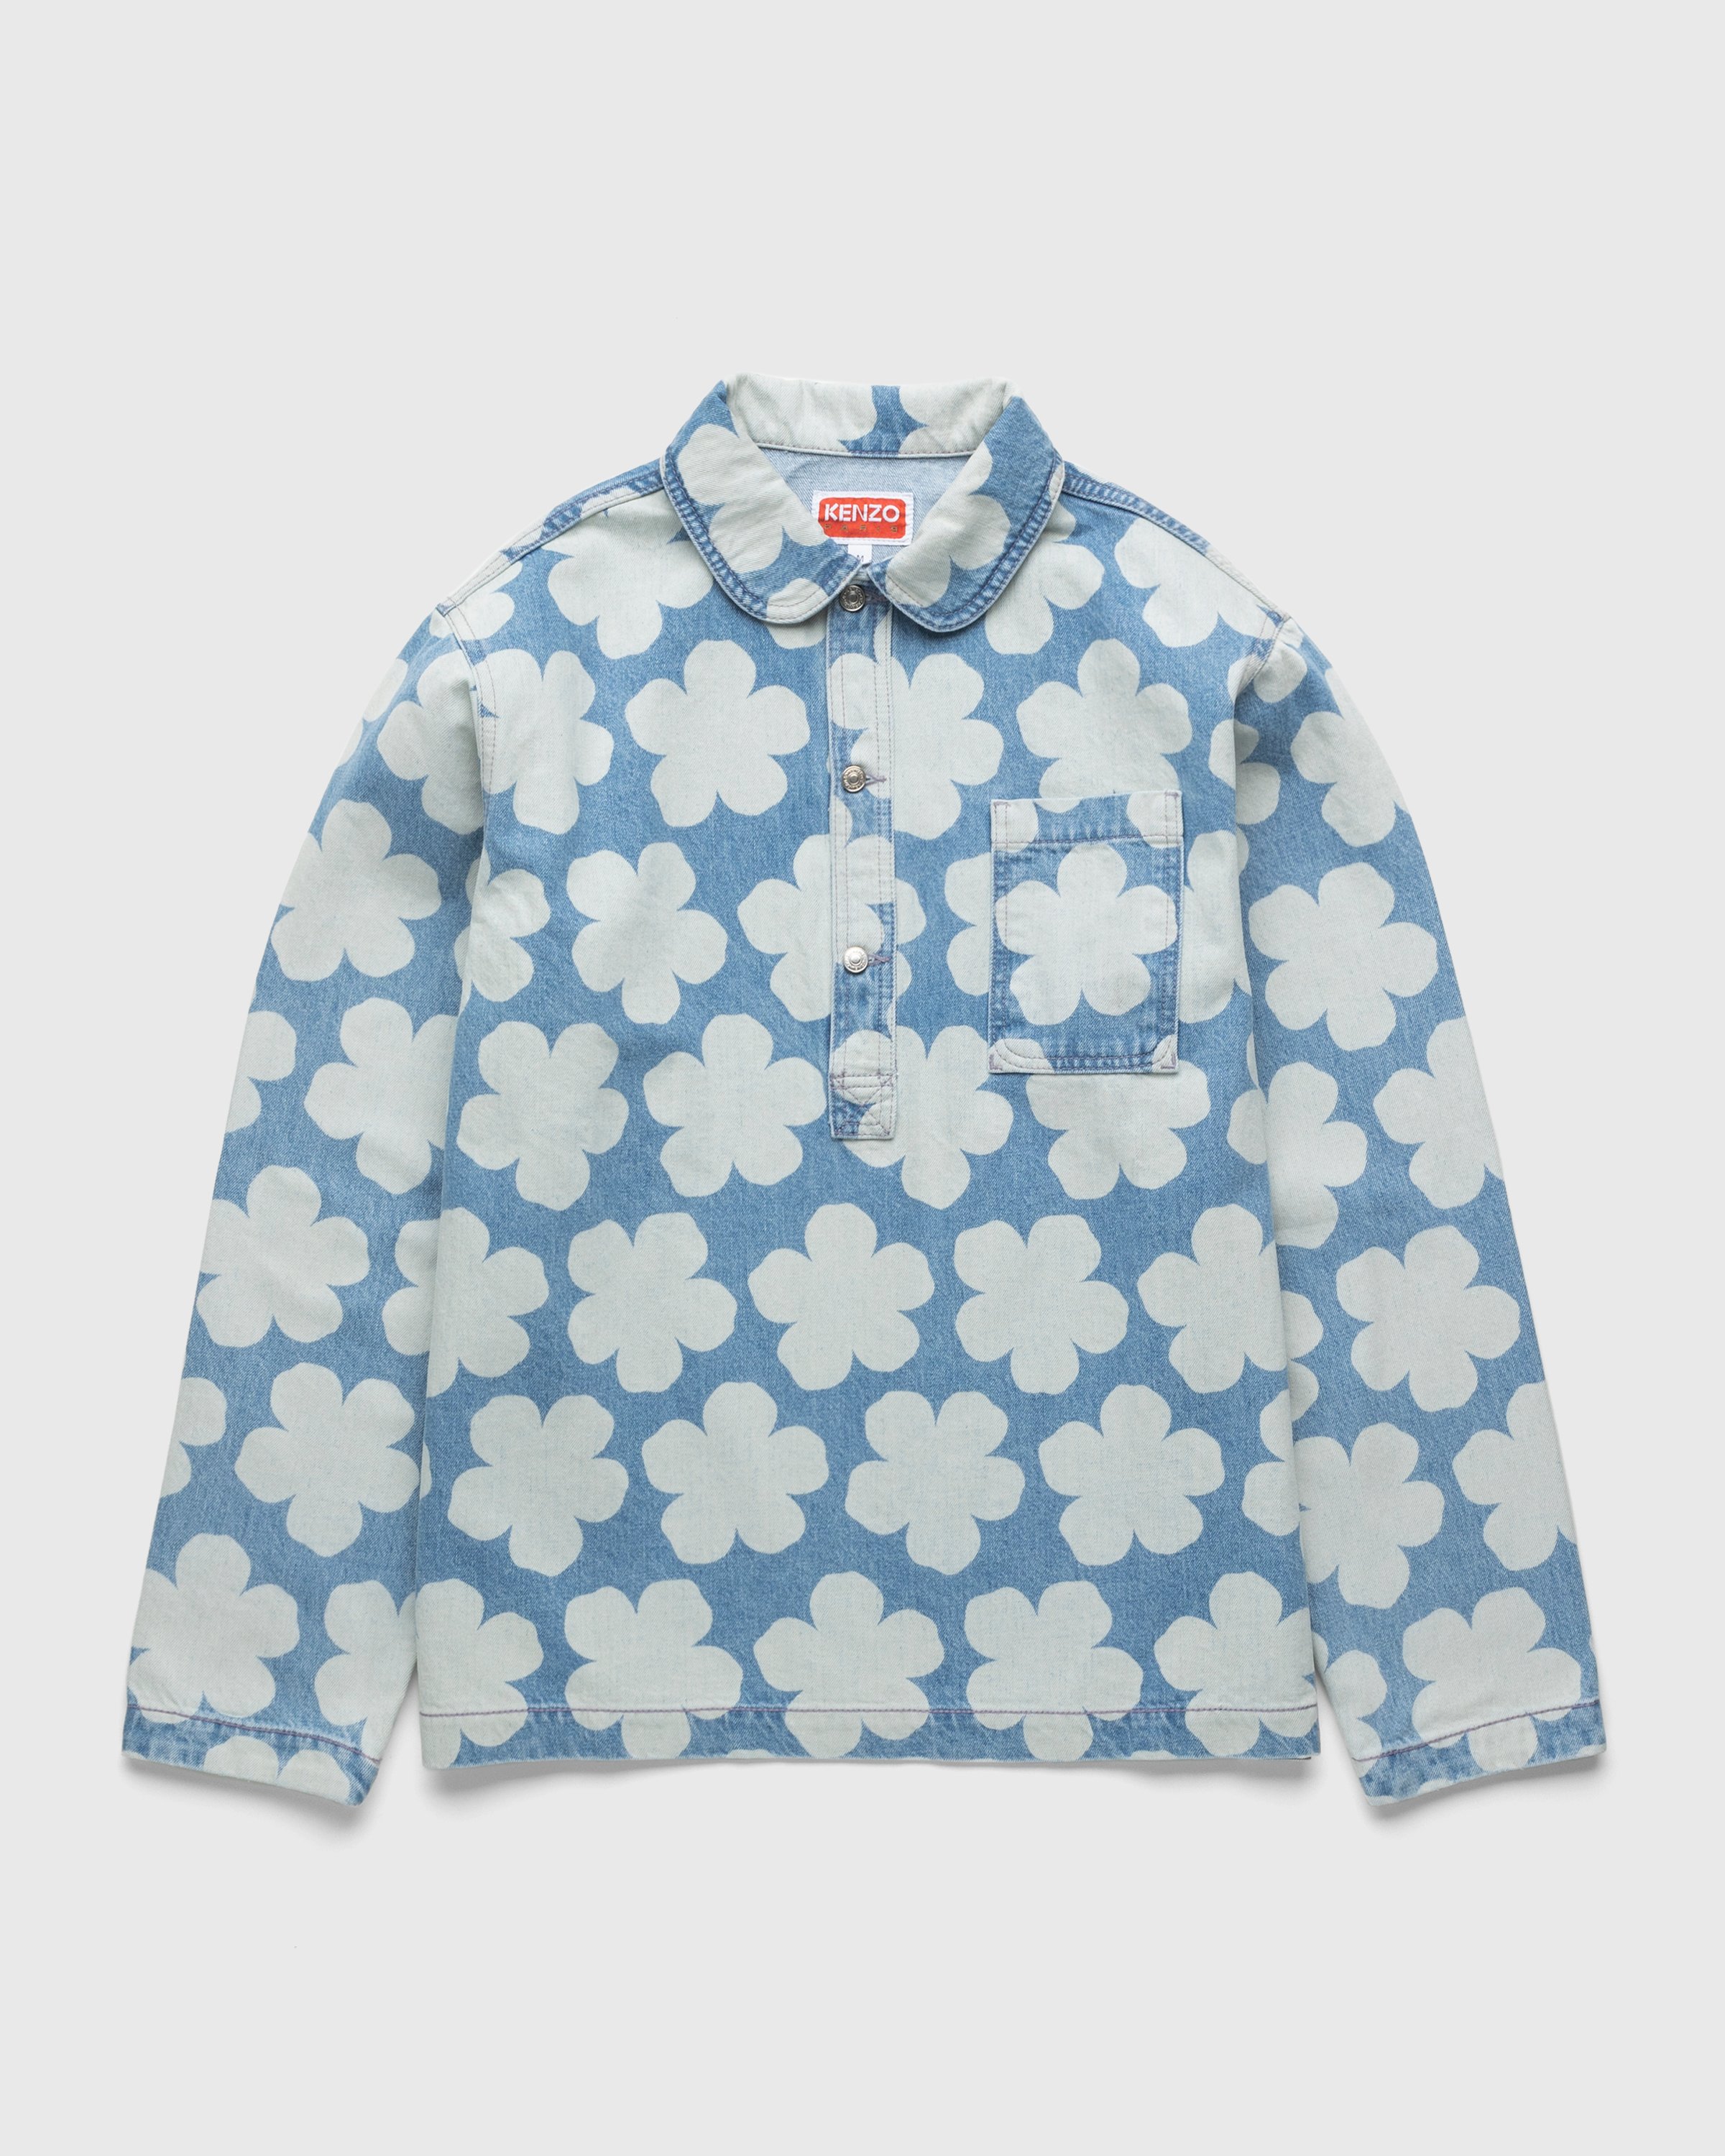 Kenzo – Hana Dots Denim Overshirt Sky Blue | Highsnobiety Shop